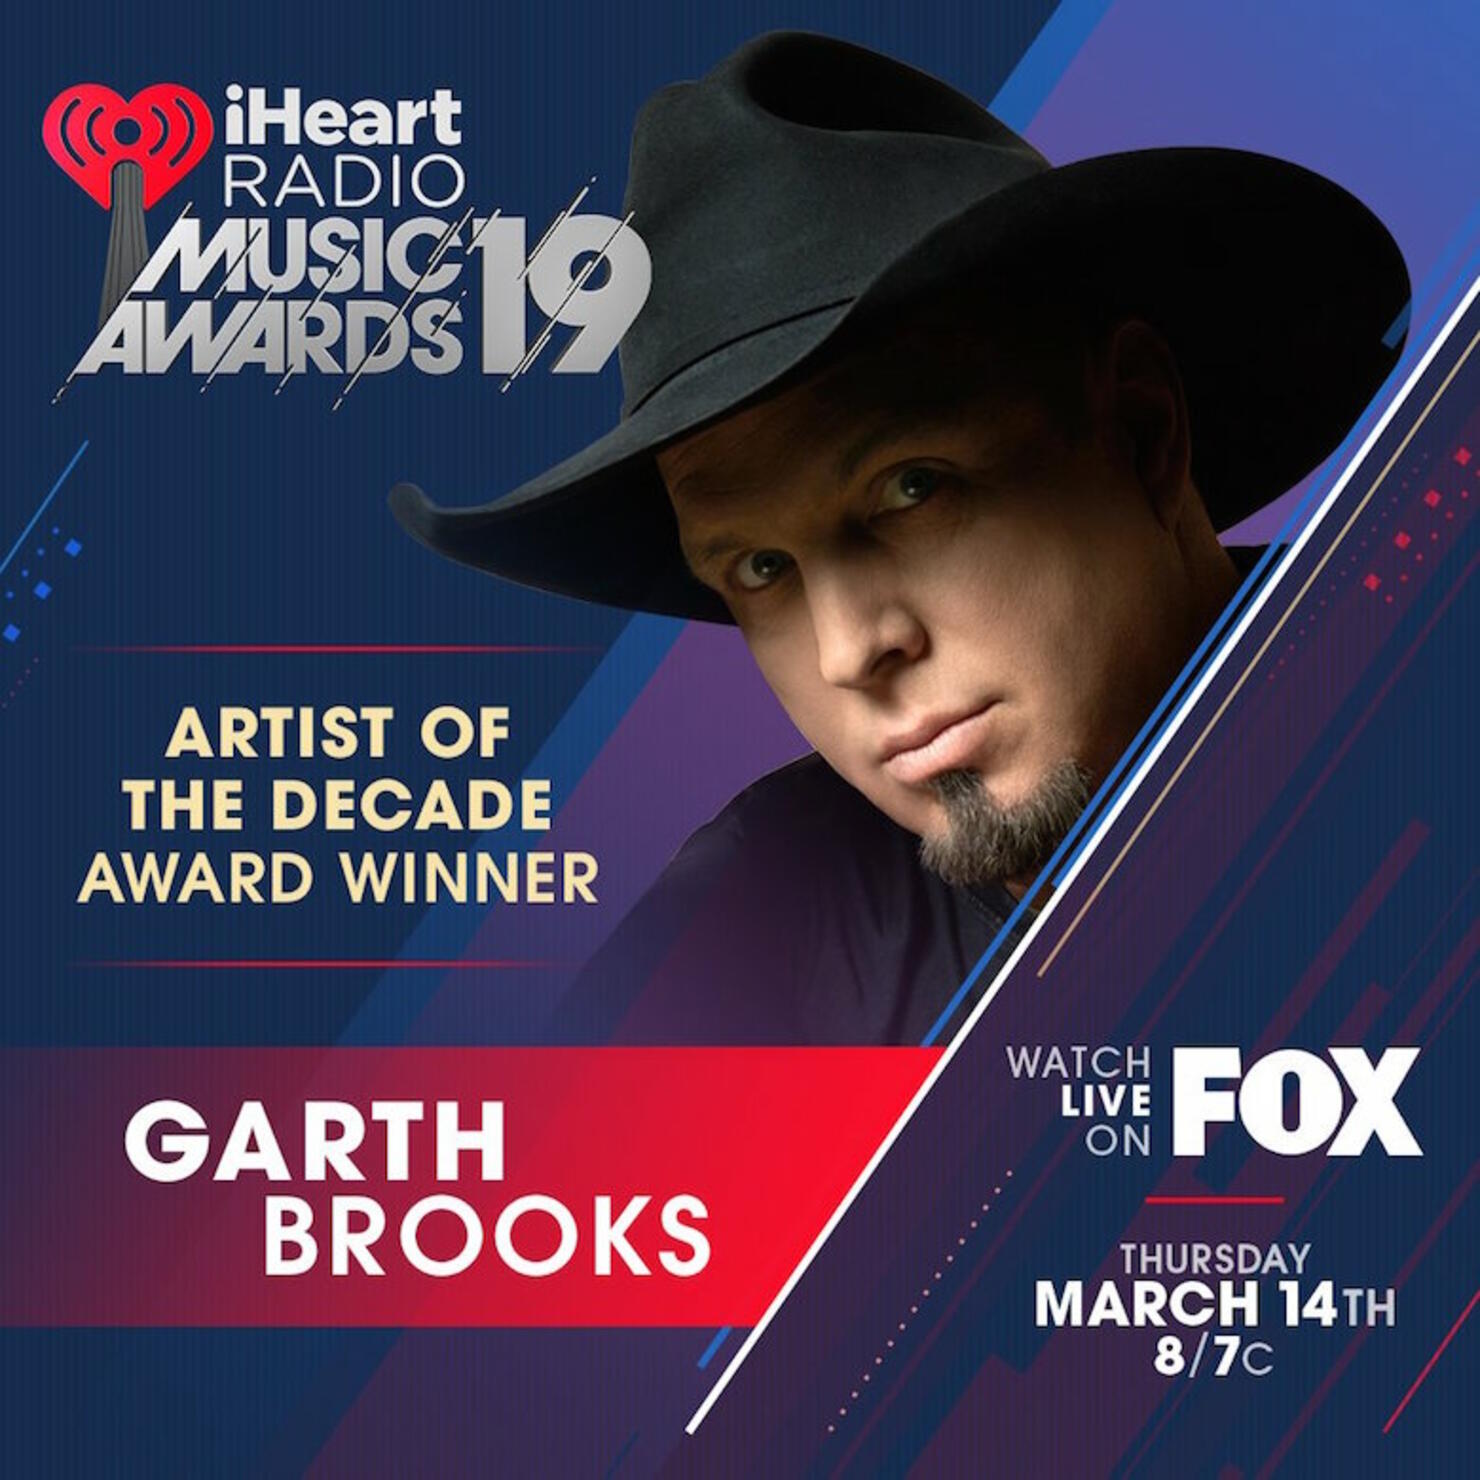 Garth Brooks 2019 iHeartRadio Music Awards